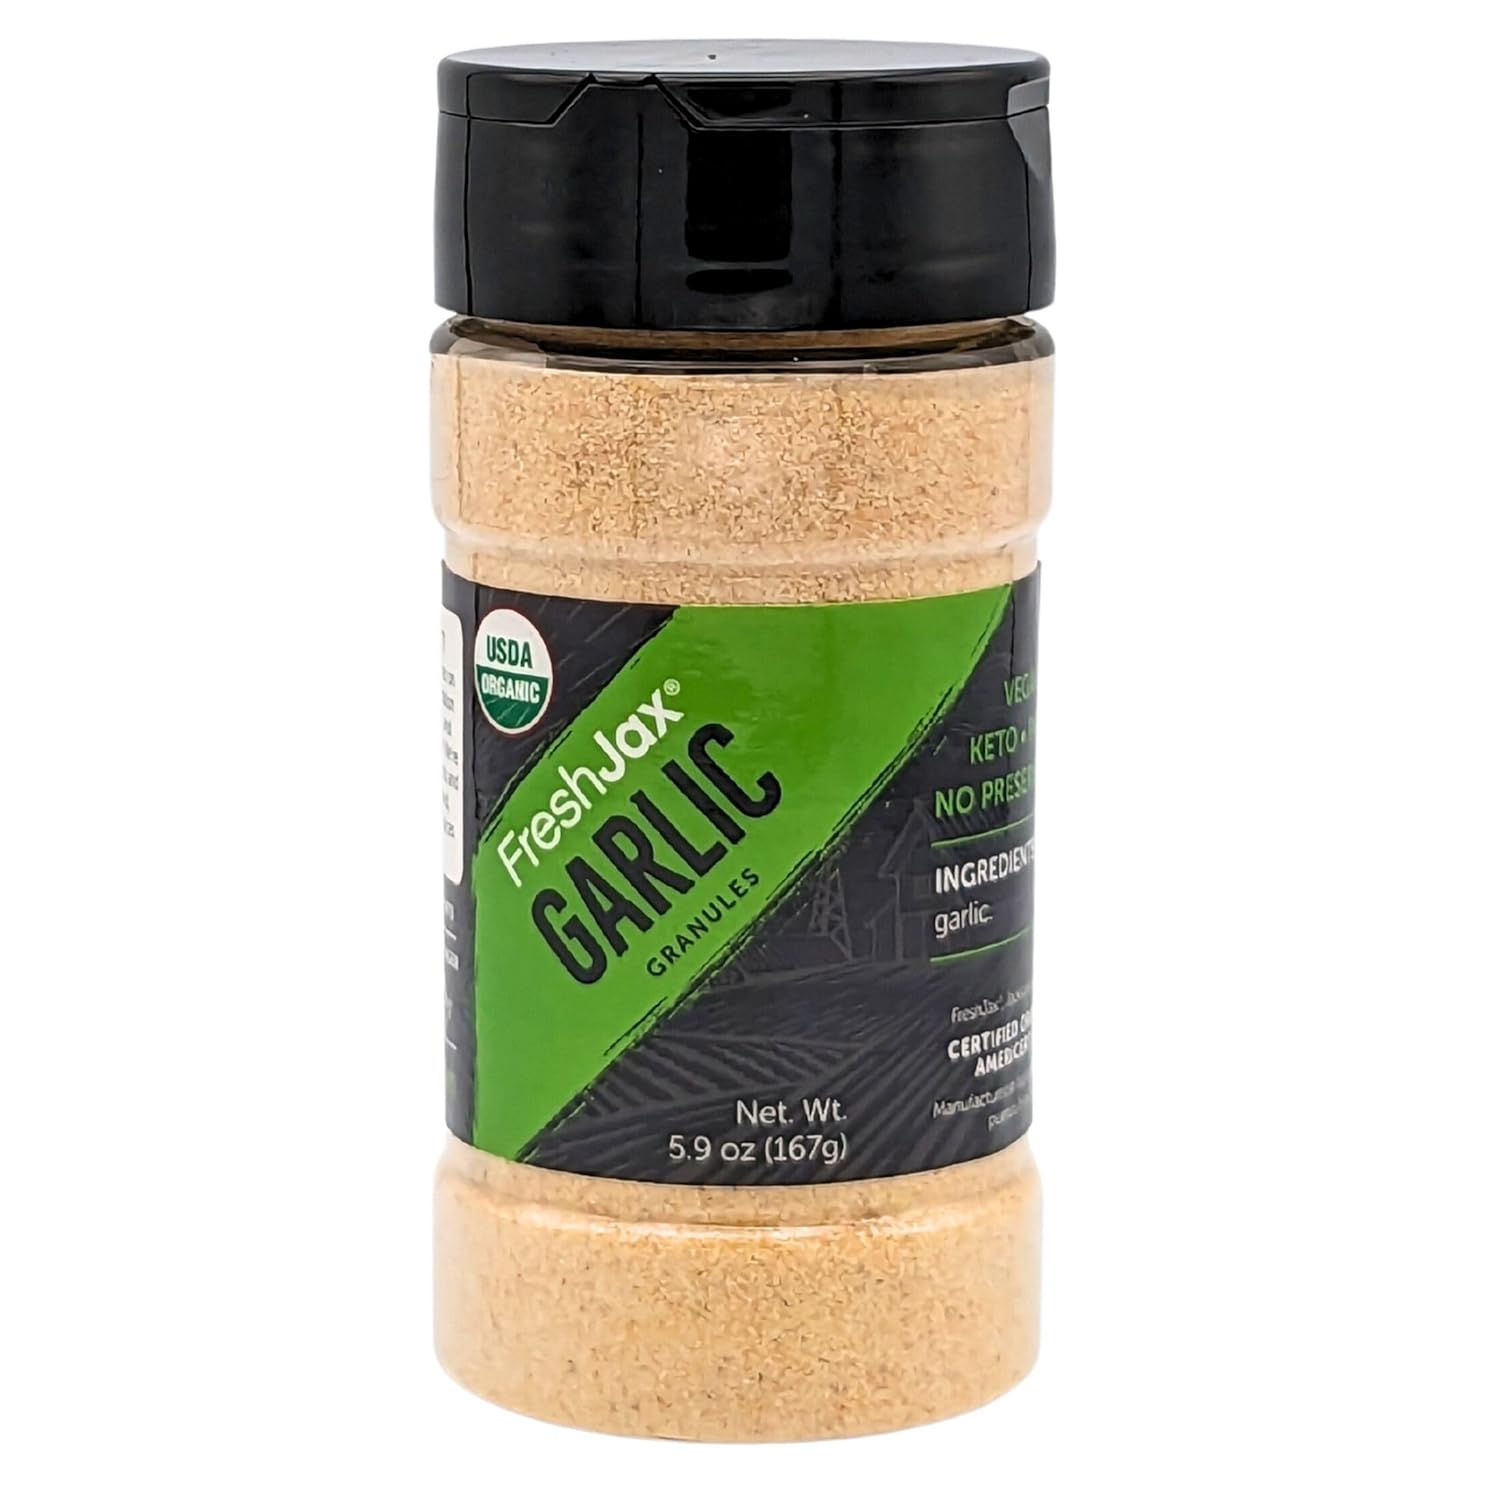 FreshJax Organic Garlic Granules (5.9 oz Bottle) Certified Organic Non GMO Garlic Powder | Gluten Free Granulated Garlic | Keto, Paleo, No Preservatives | Handcrafted in Jacksonville, Florida